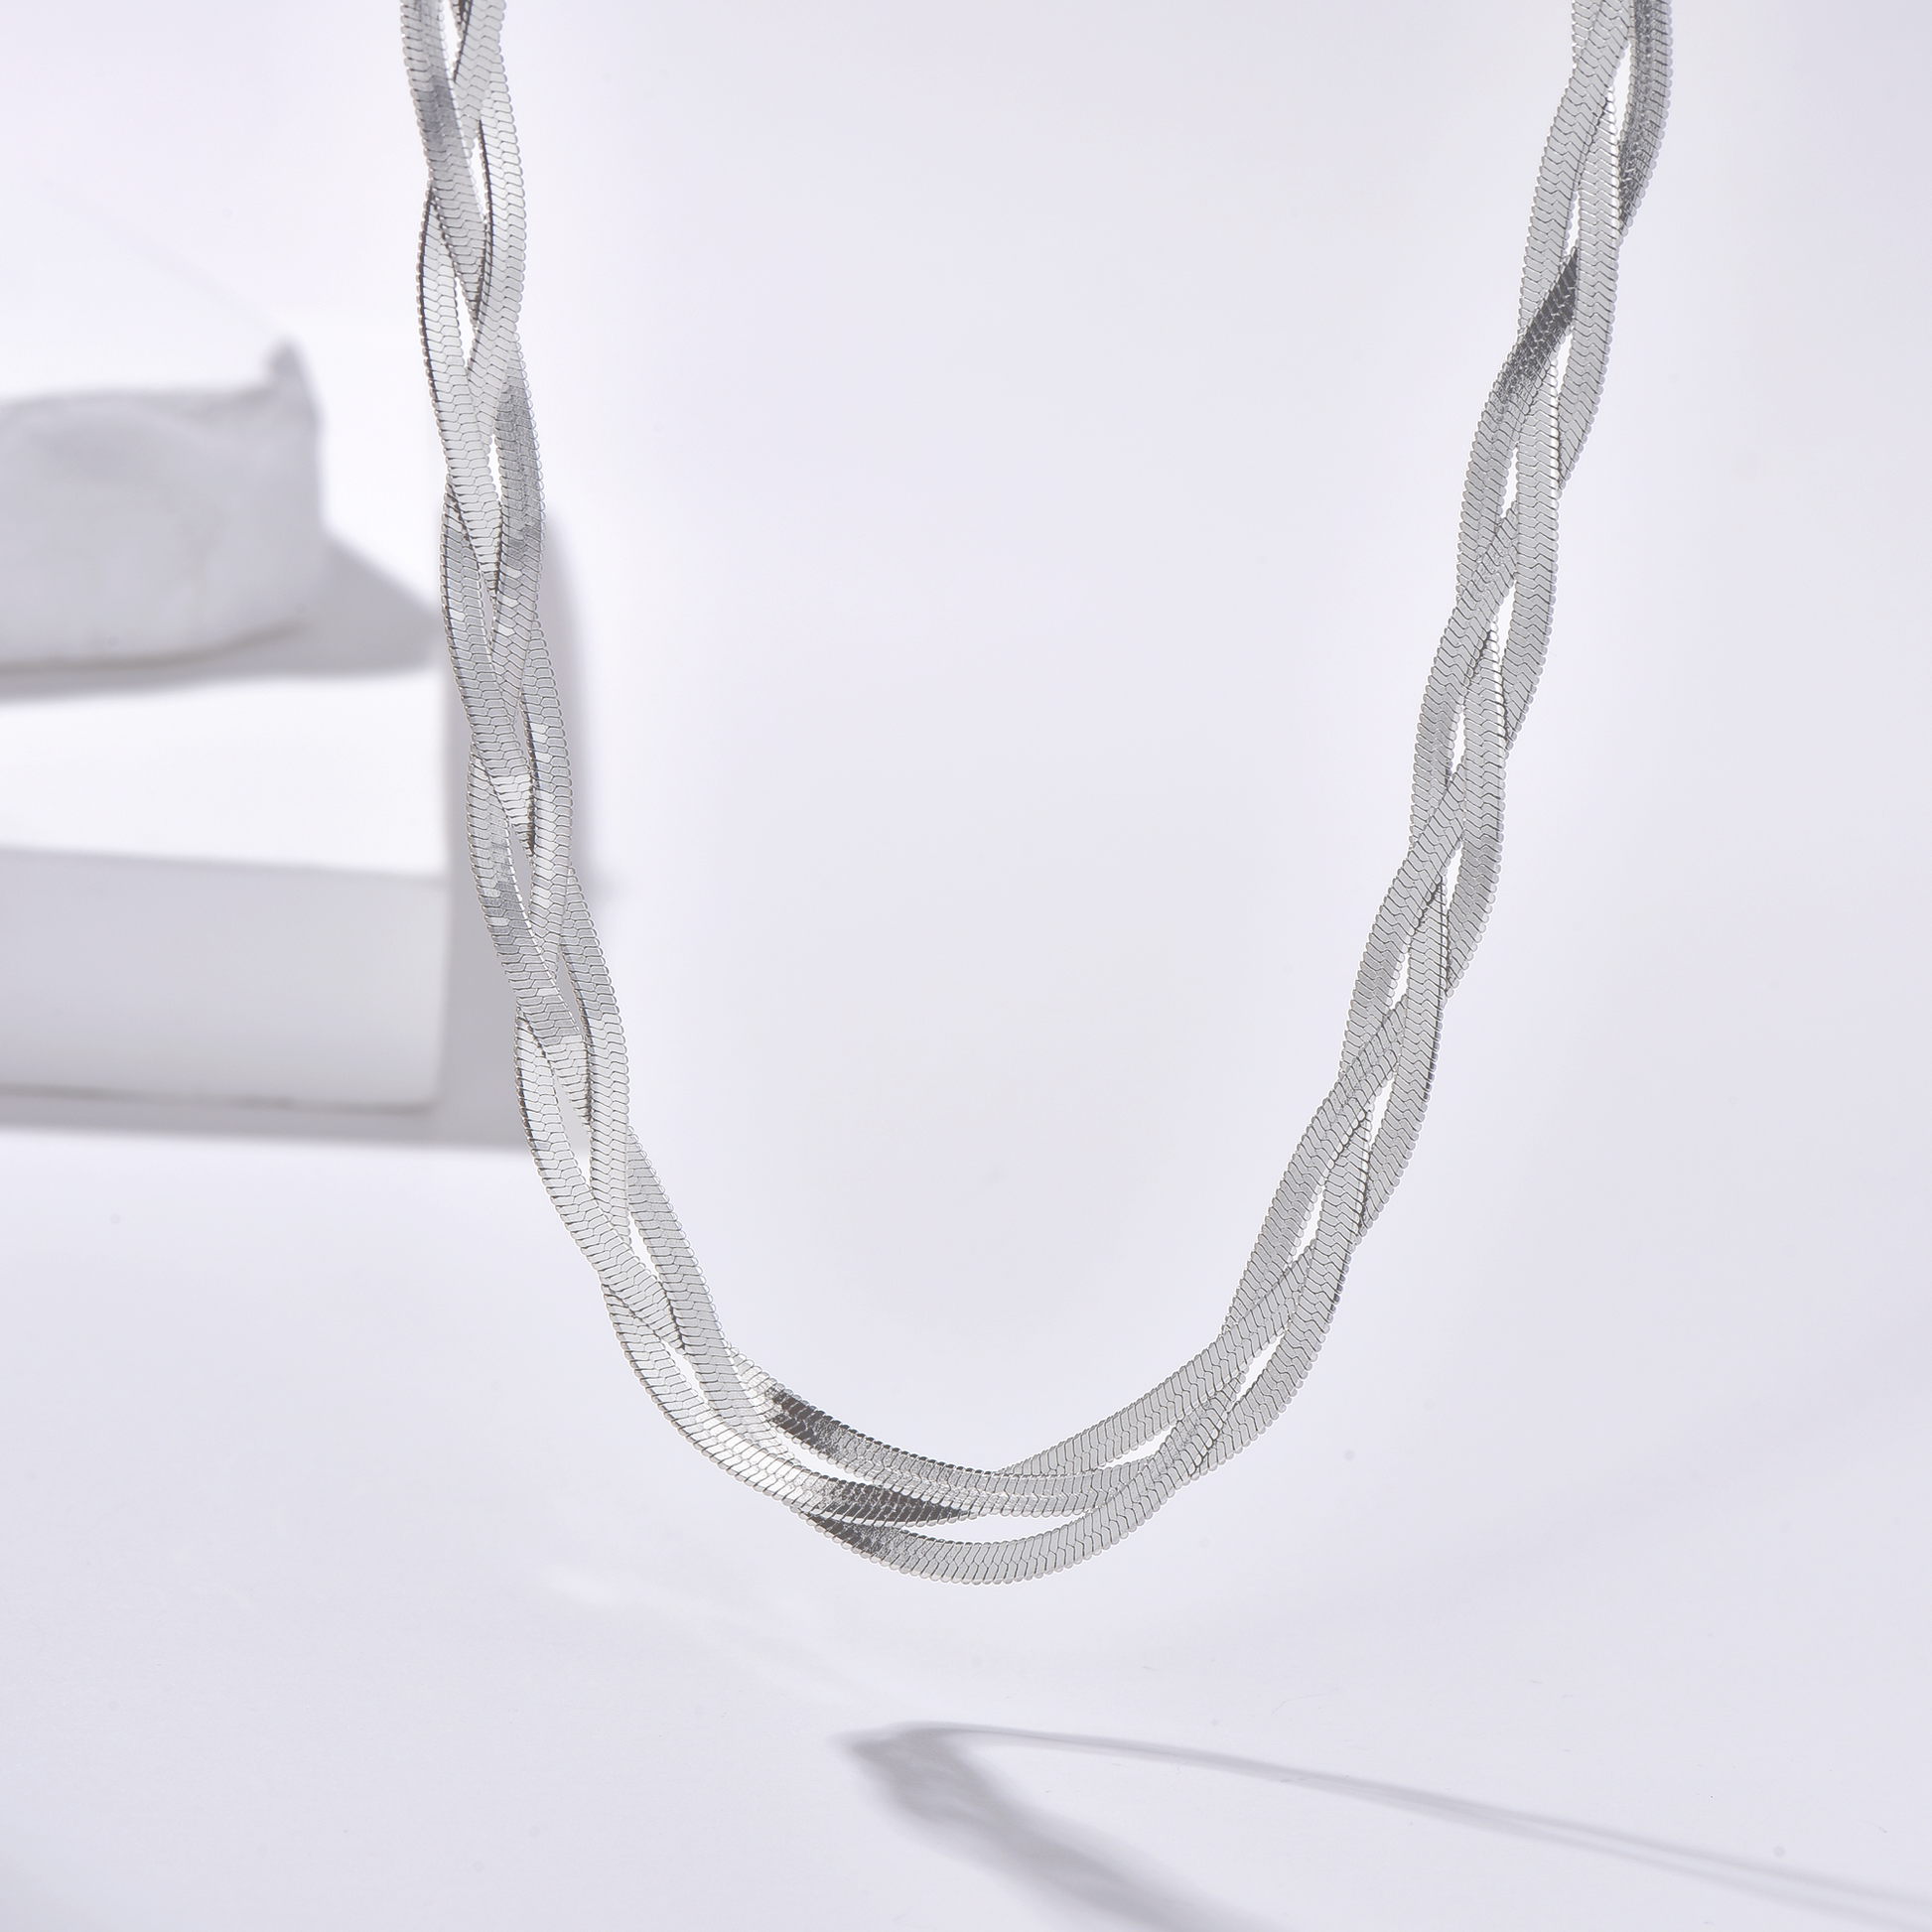 Silver Braid Chain Set - ONNNIII